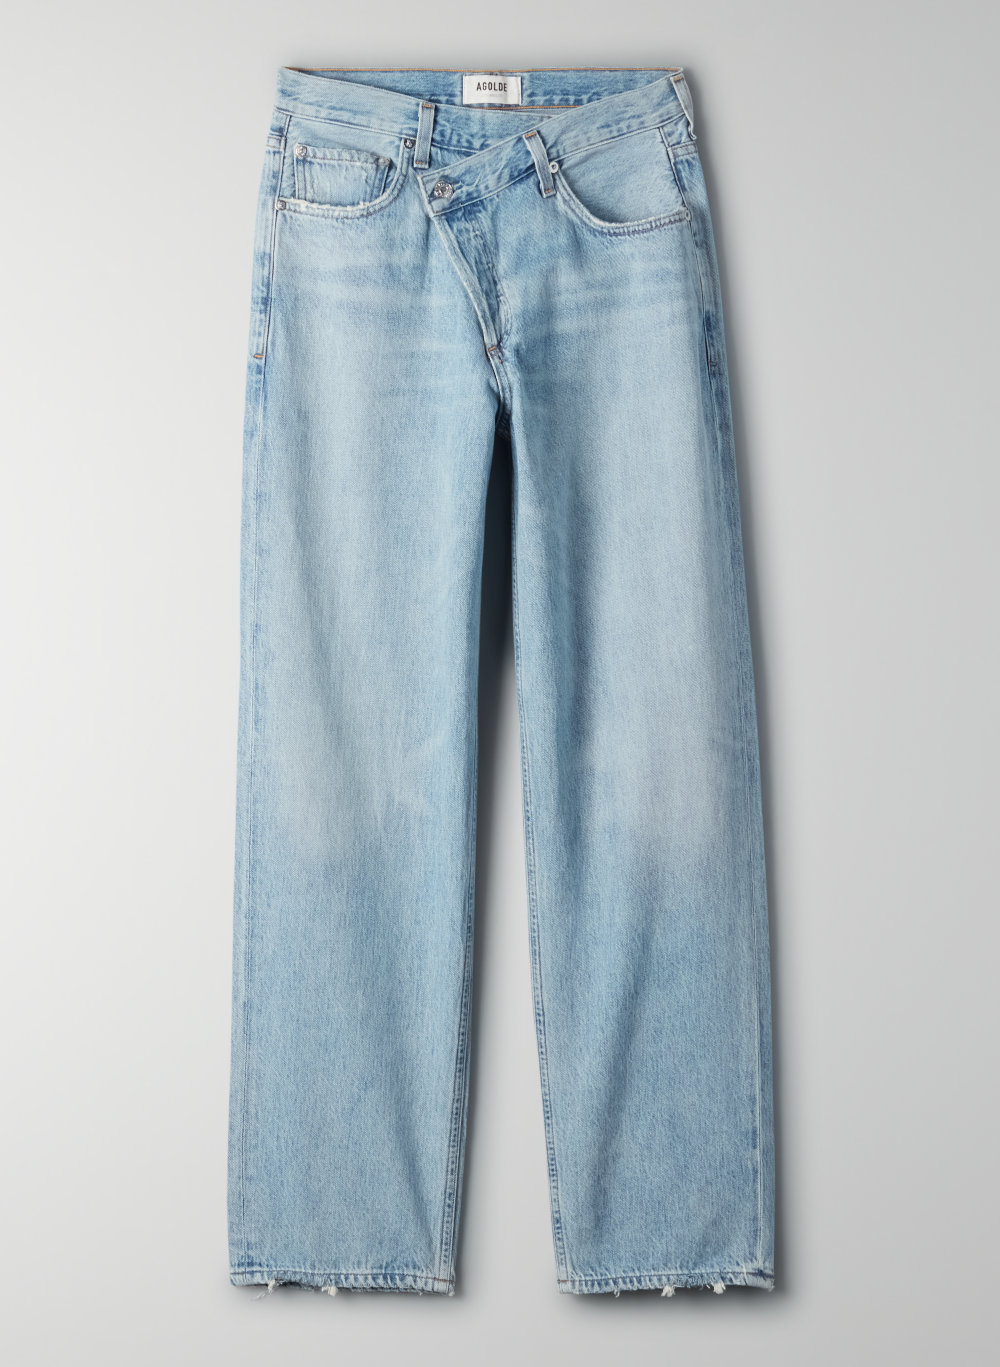 cross jeans price